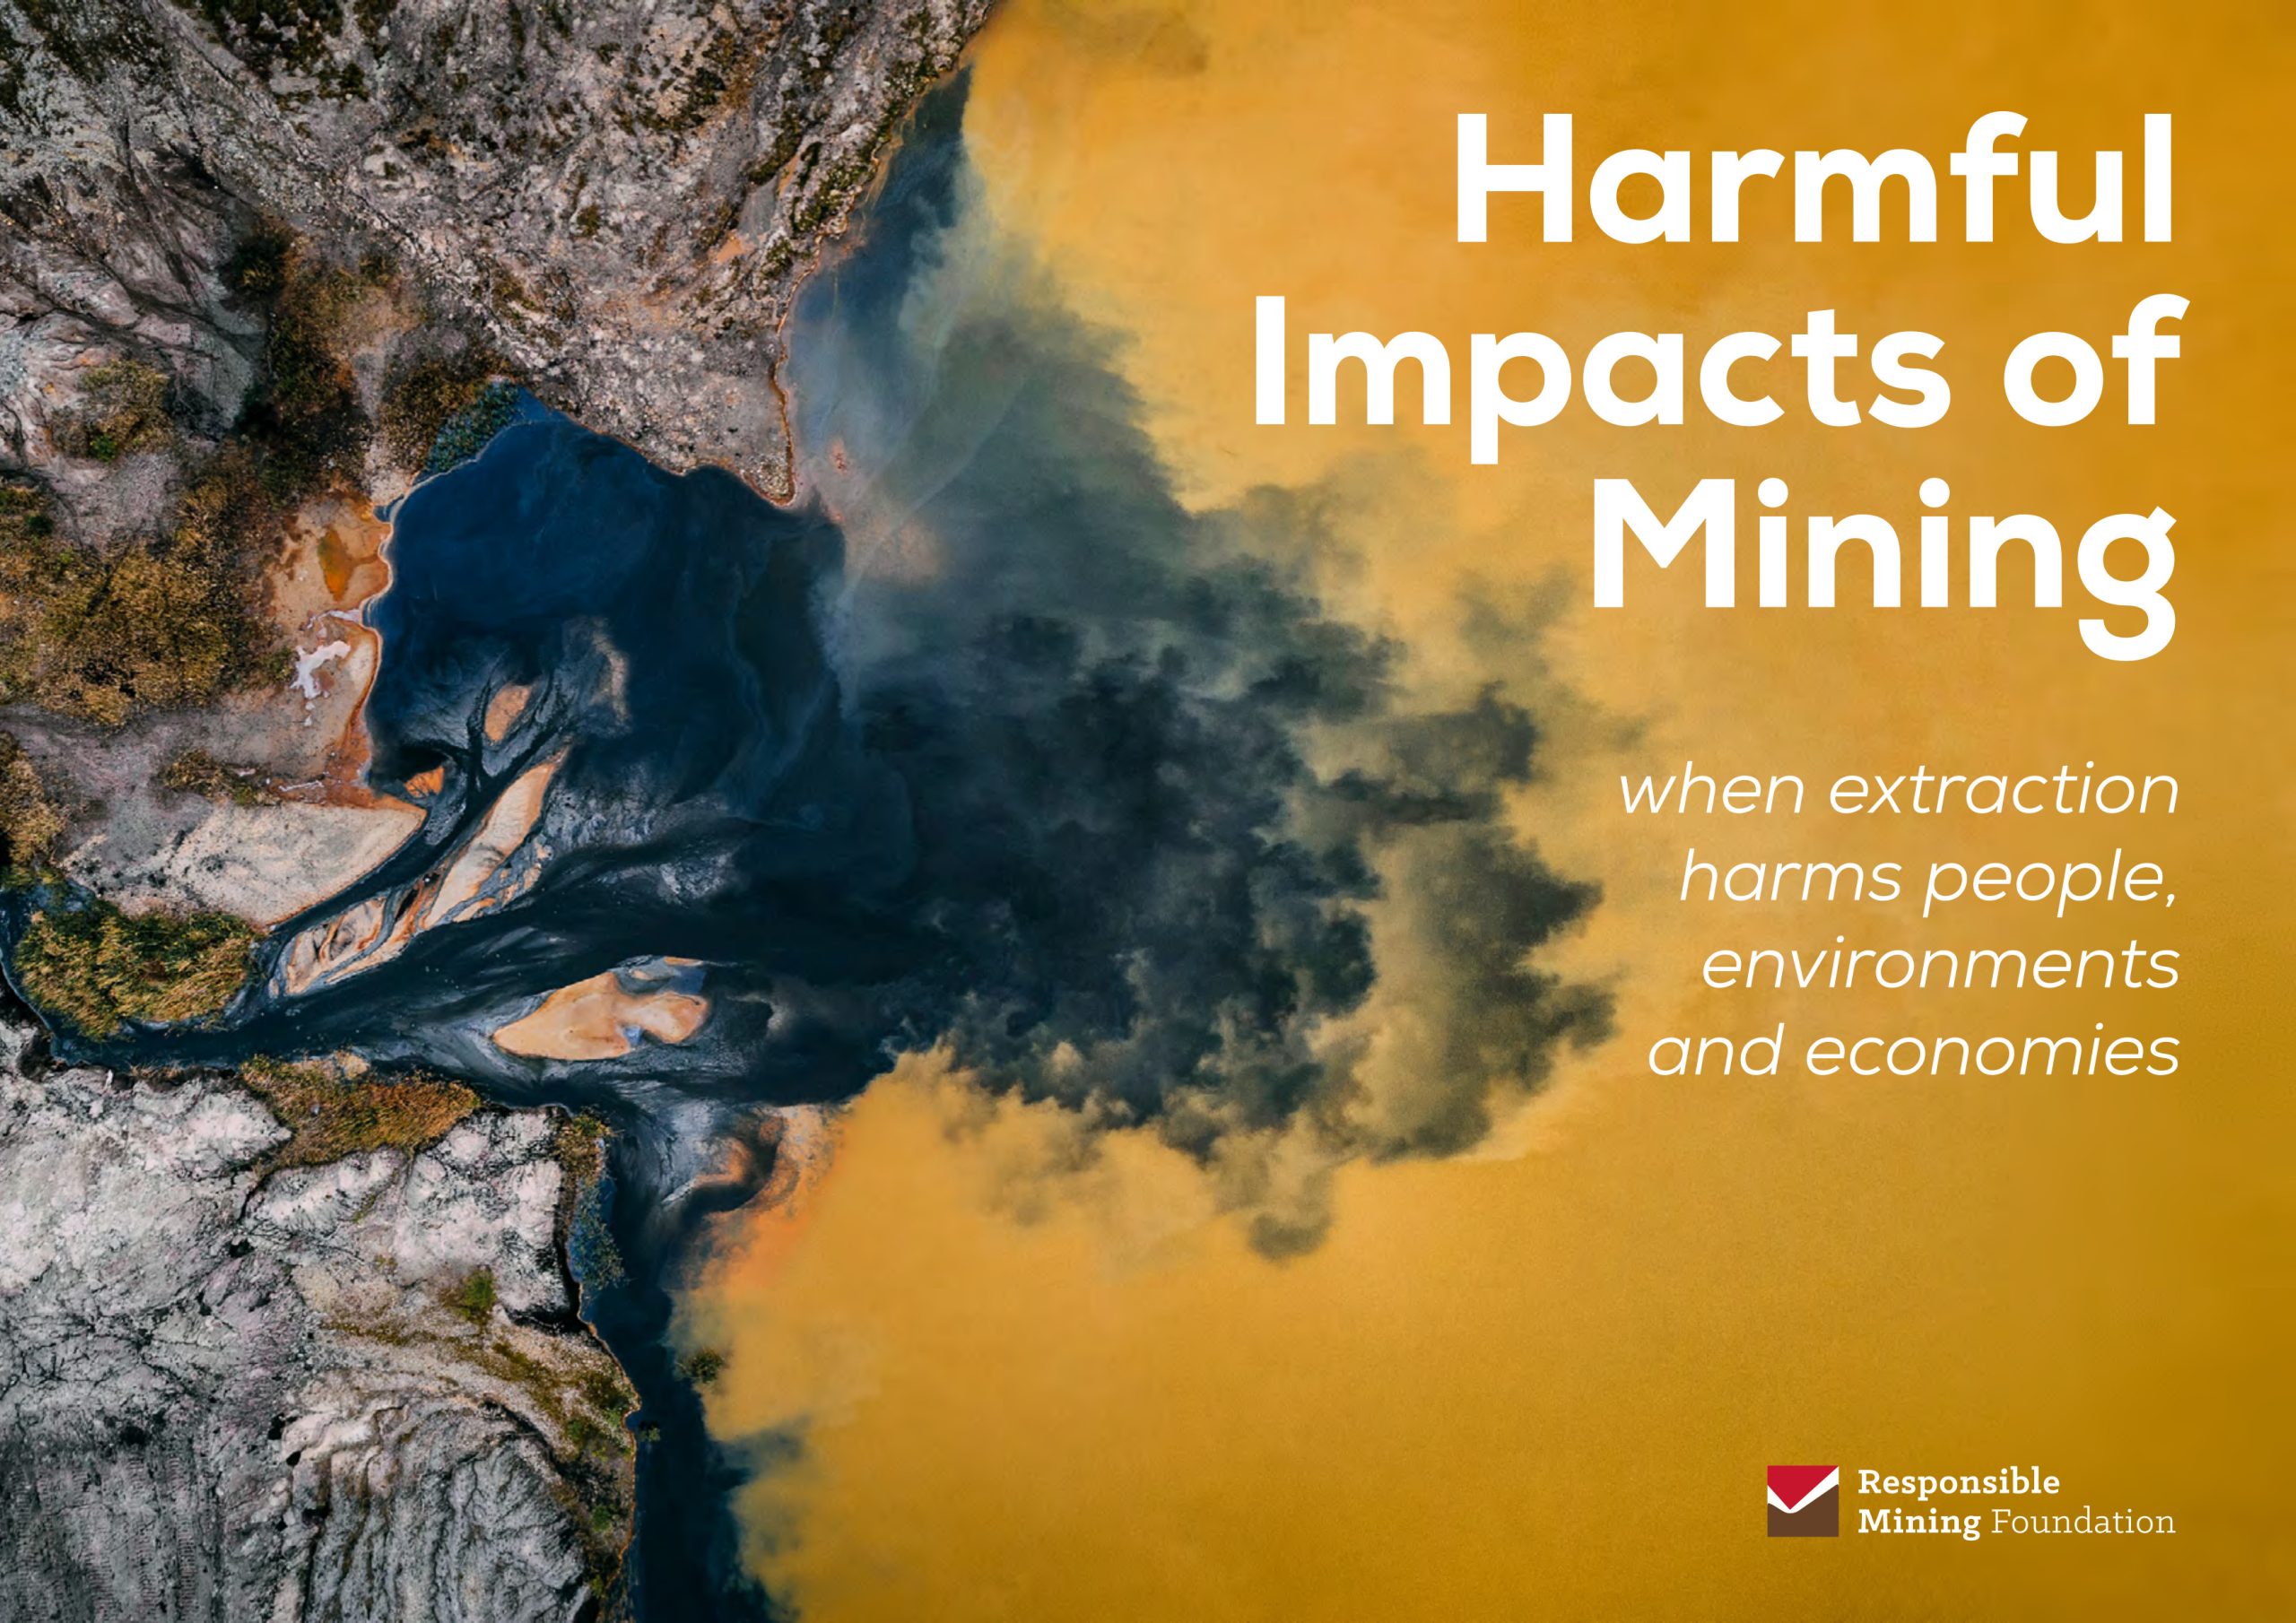 Is mining harmful?